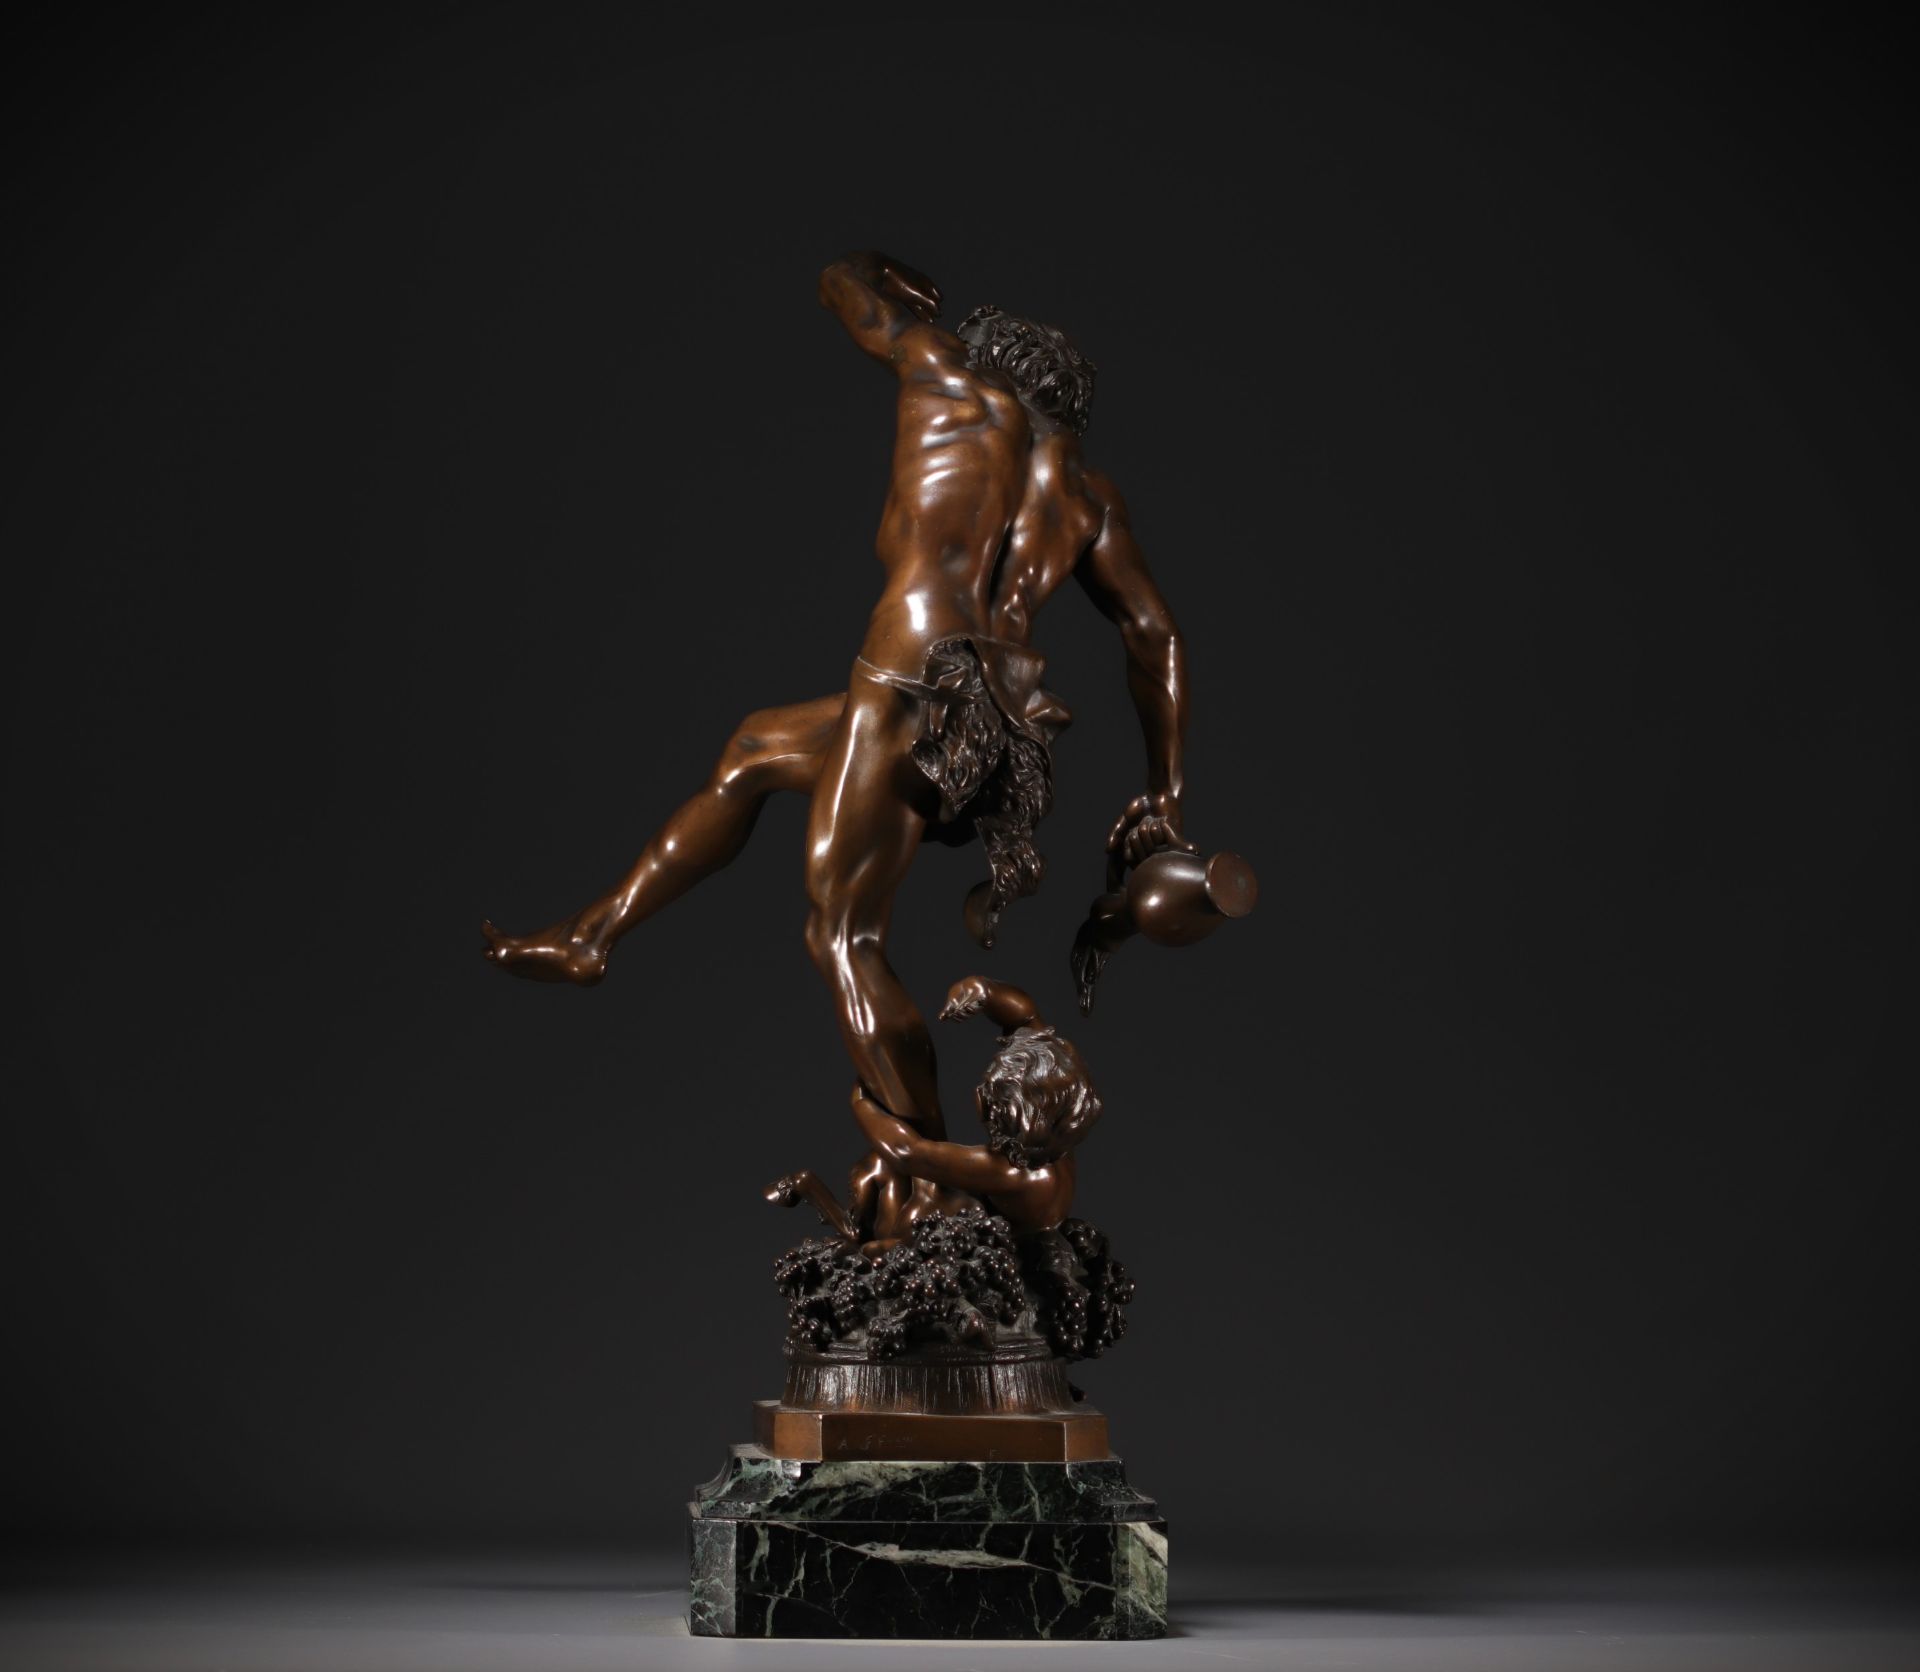 Louis HOLLWECK (1865-1935) "Le Vin" Large bronze sculpture on marble base. - Image 3 of 7